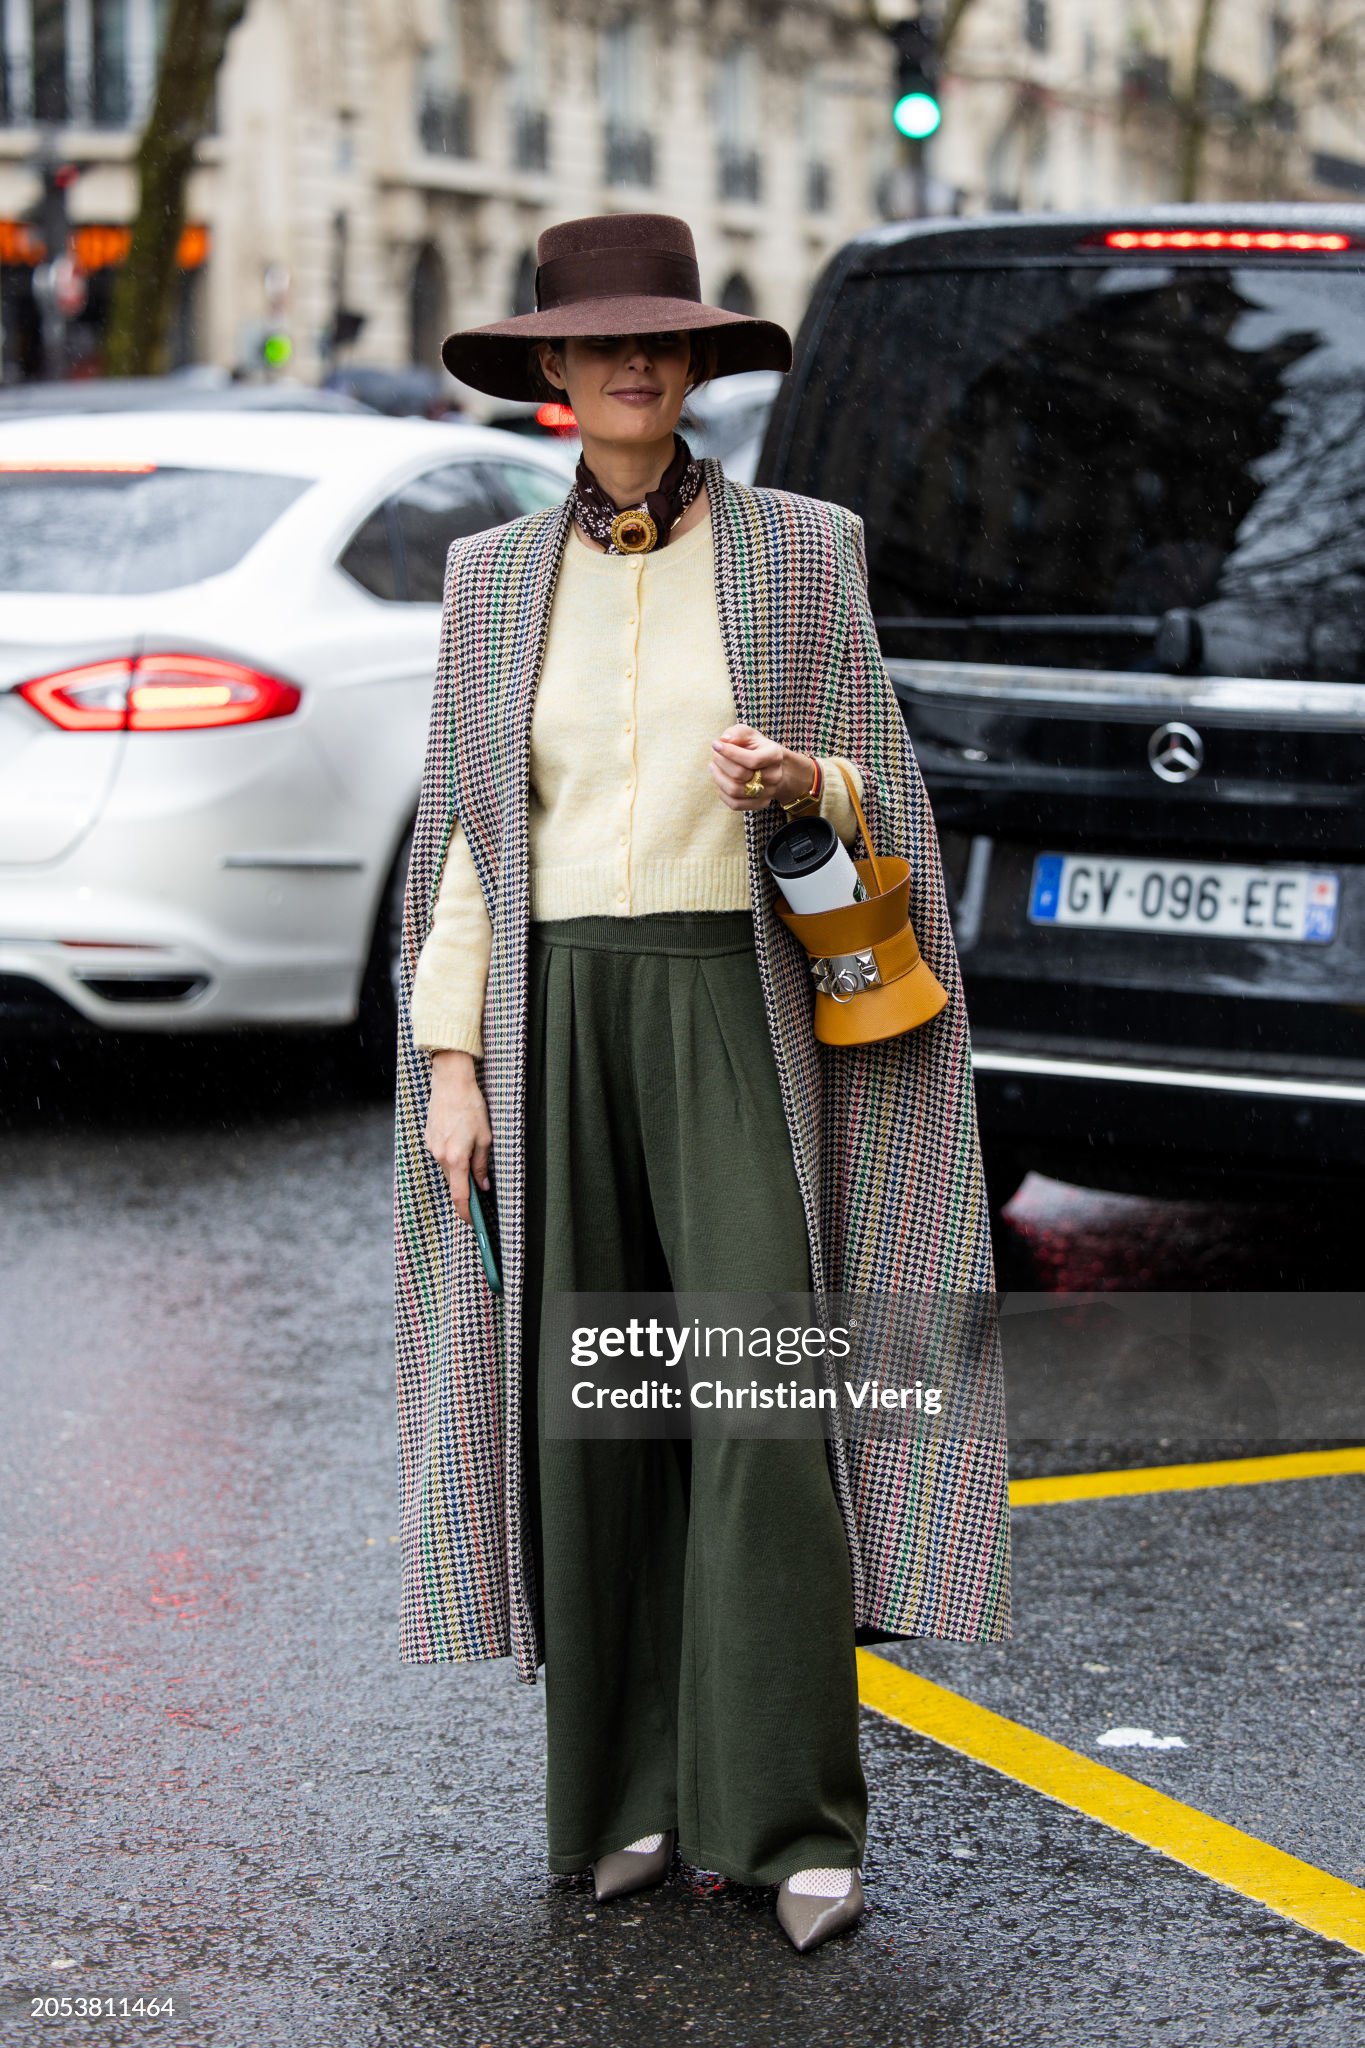 paris-france-maria-de-la-orden-wears-brown-floppy-hat-checkered-cape-green-pants-brown-bag.jpg